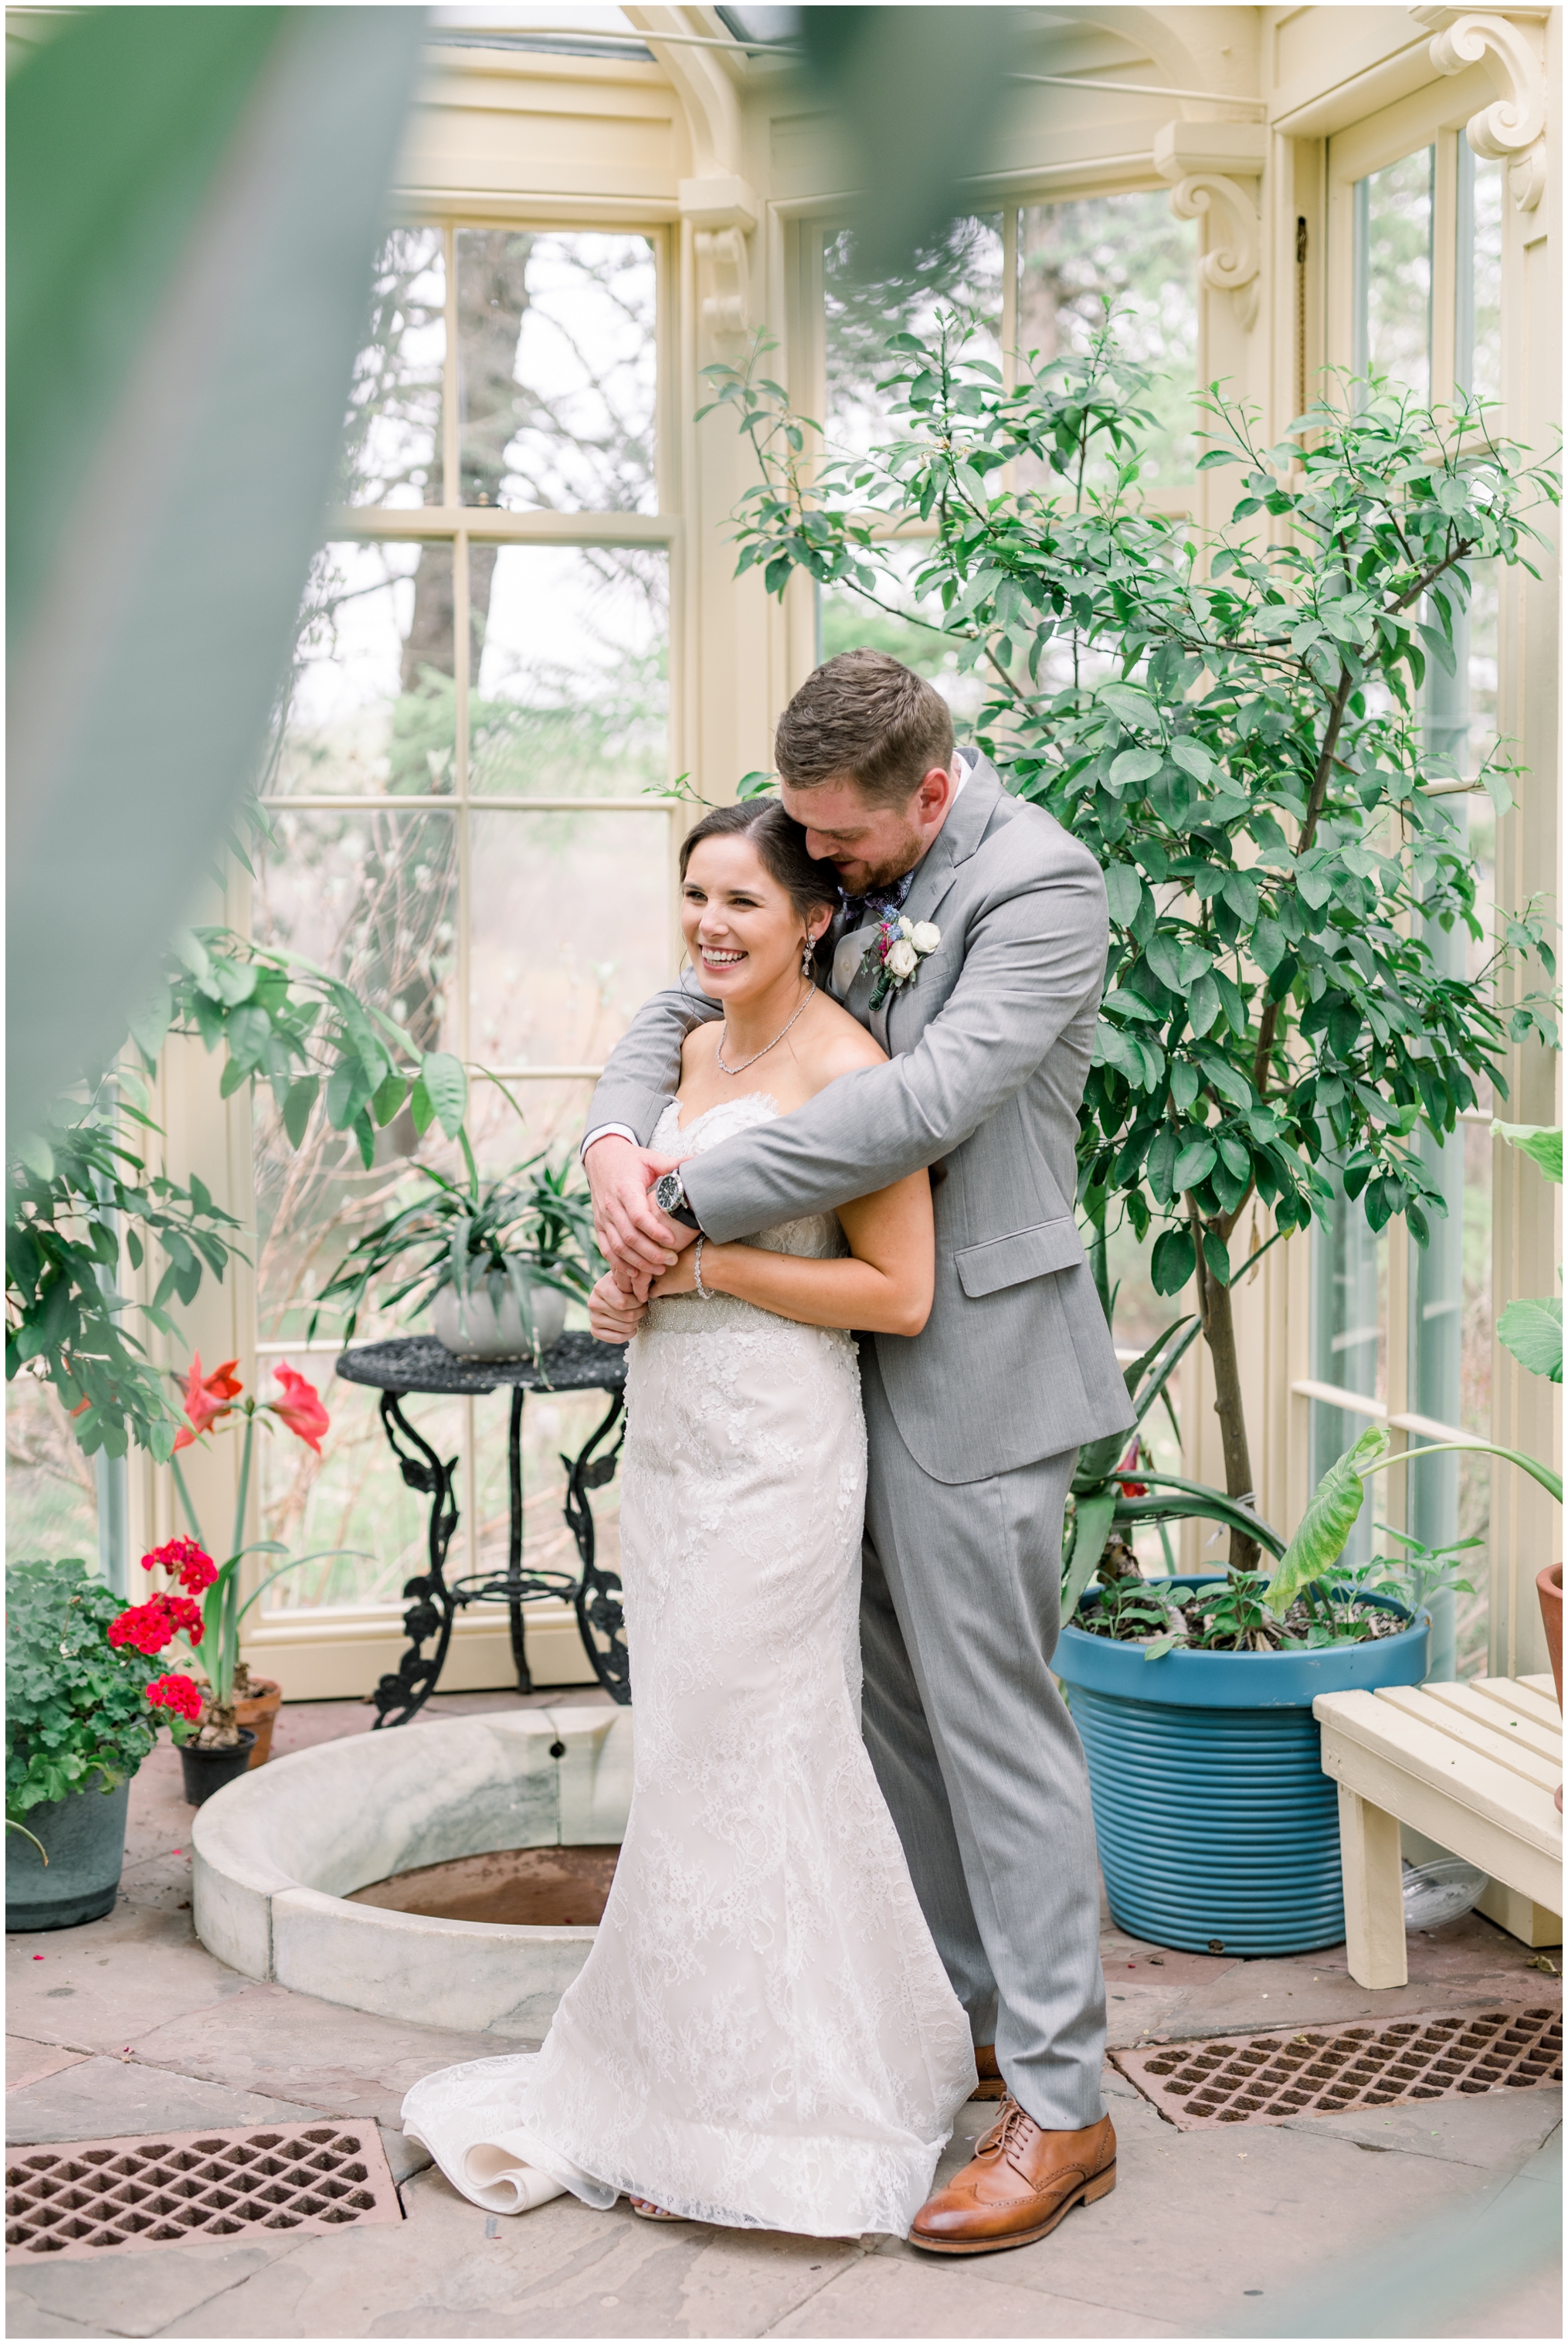 Krista Brackin Photography | April Wedding at The Carriage House at Rockwood Park_0080.jpg